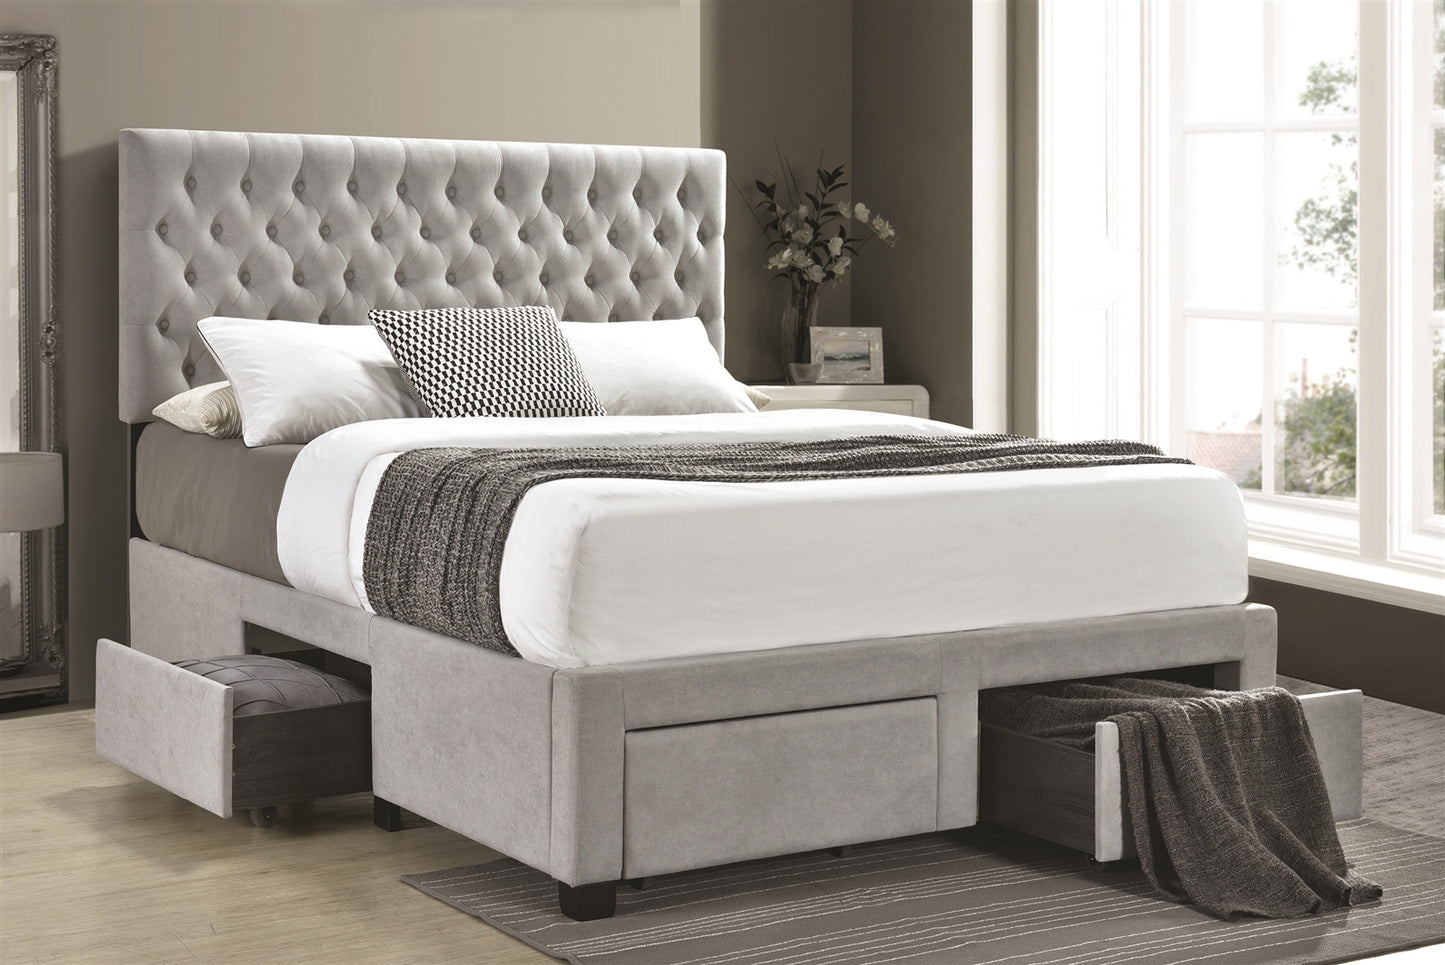 Lompoc Light Grey Upholstered Full Storage Bed